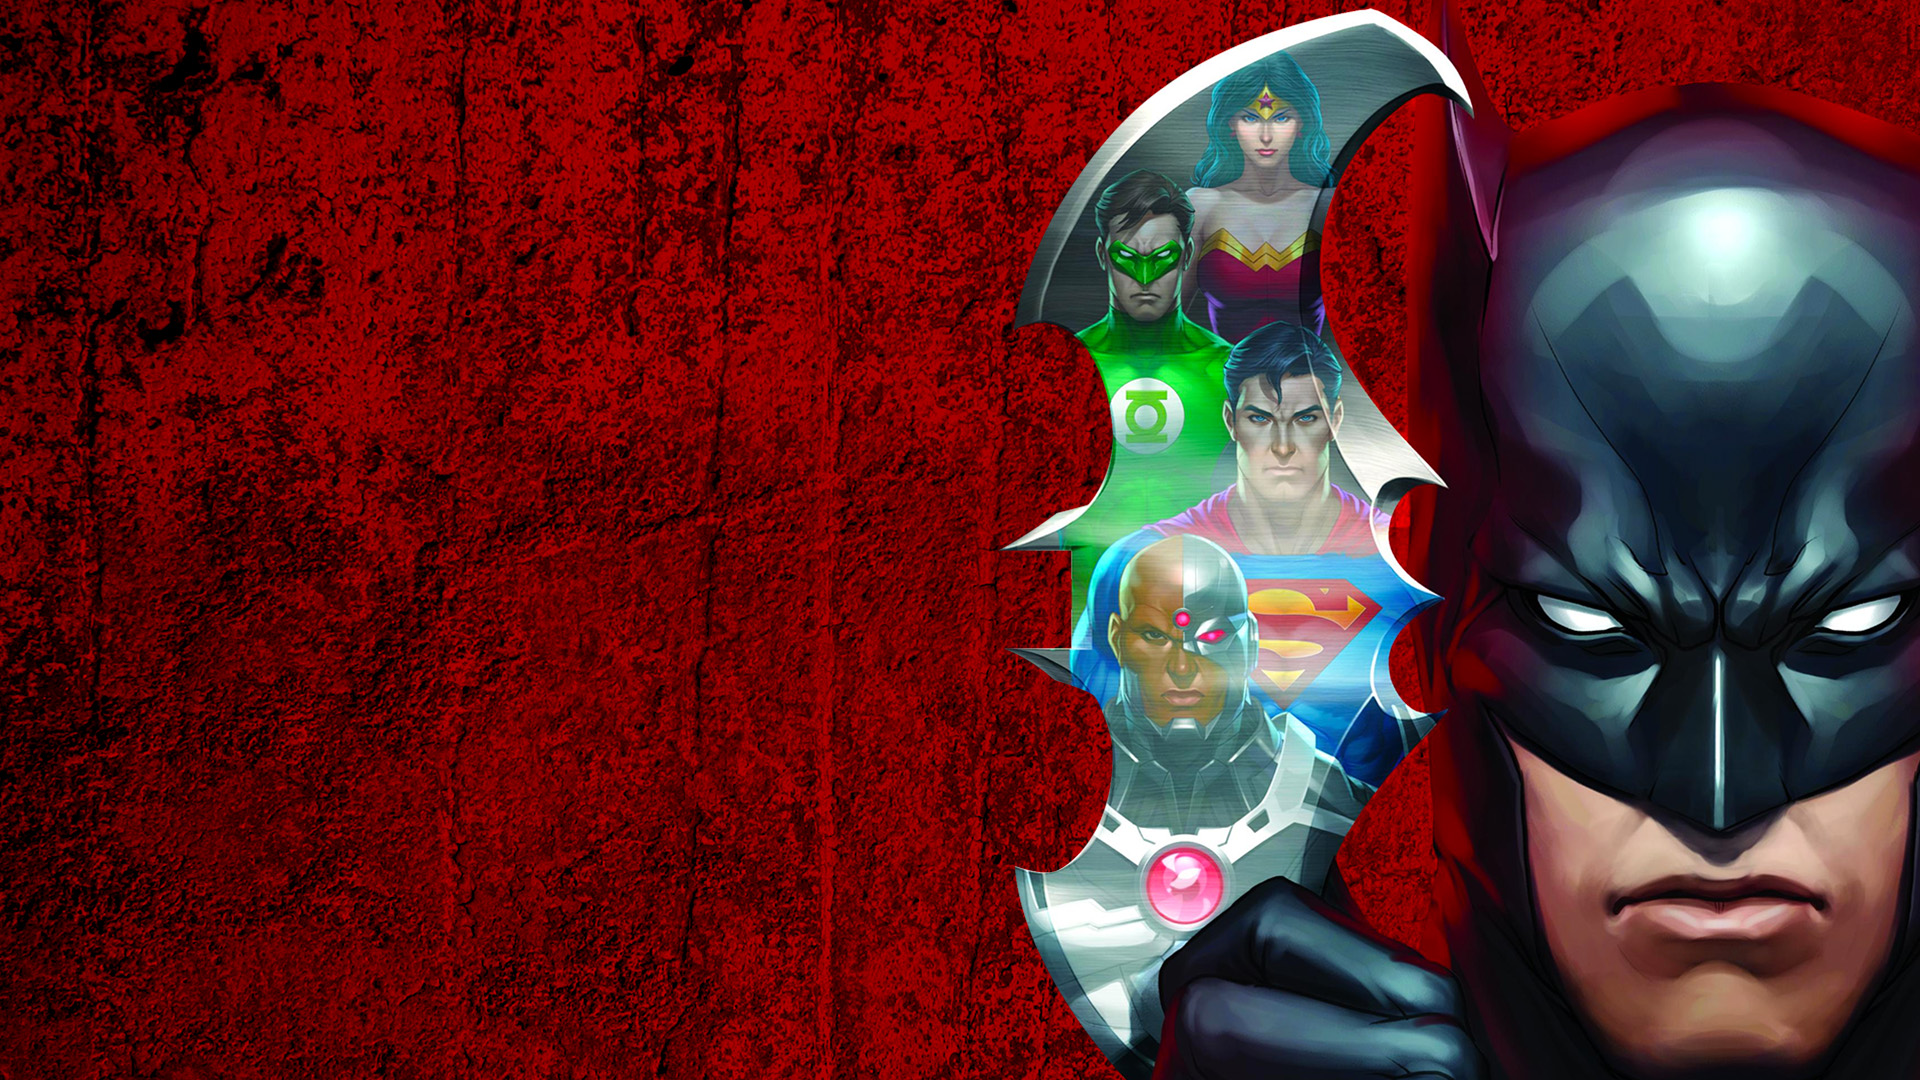 justice league wallpaper,fictional character,superhero,supervillain,batman,justice league